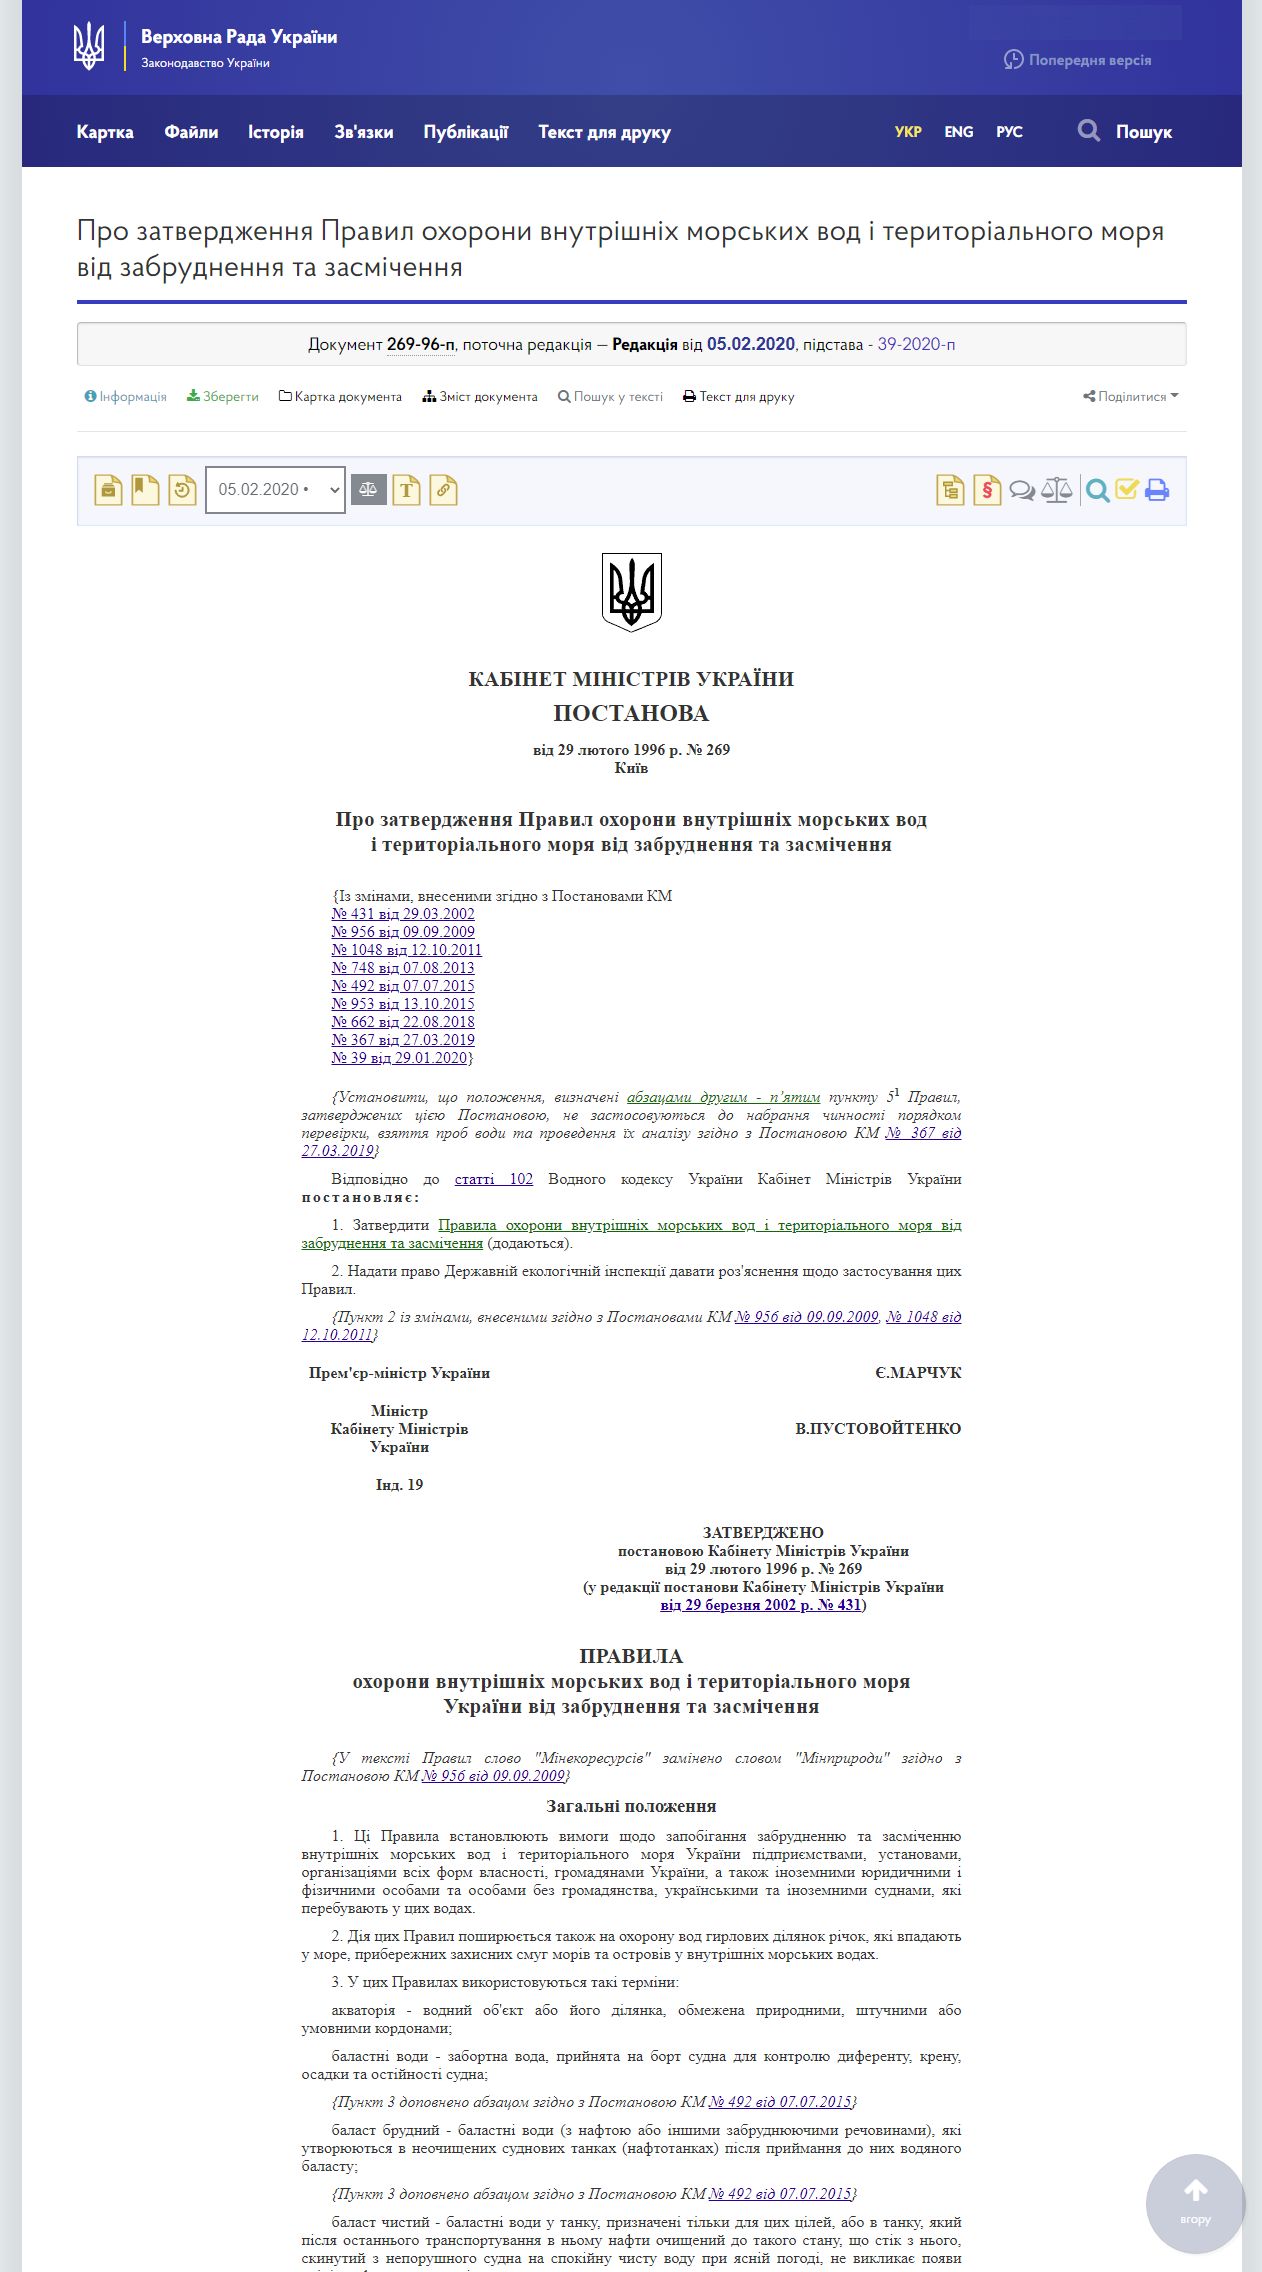 https://zakon.rada.gov.ua/laws/show/269-96-%D0%BF#Text